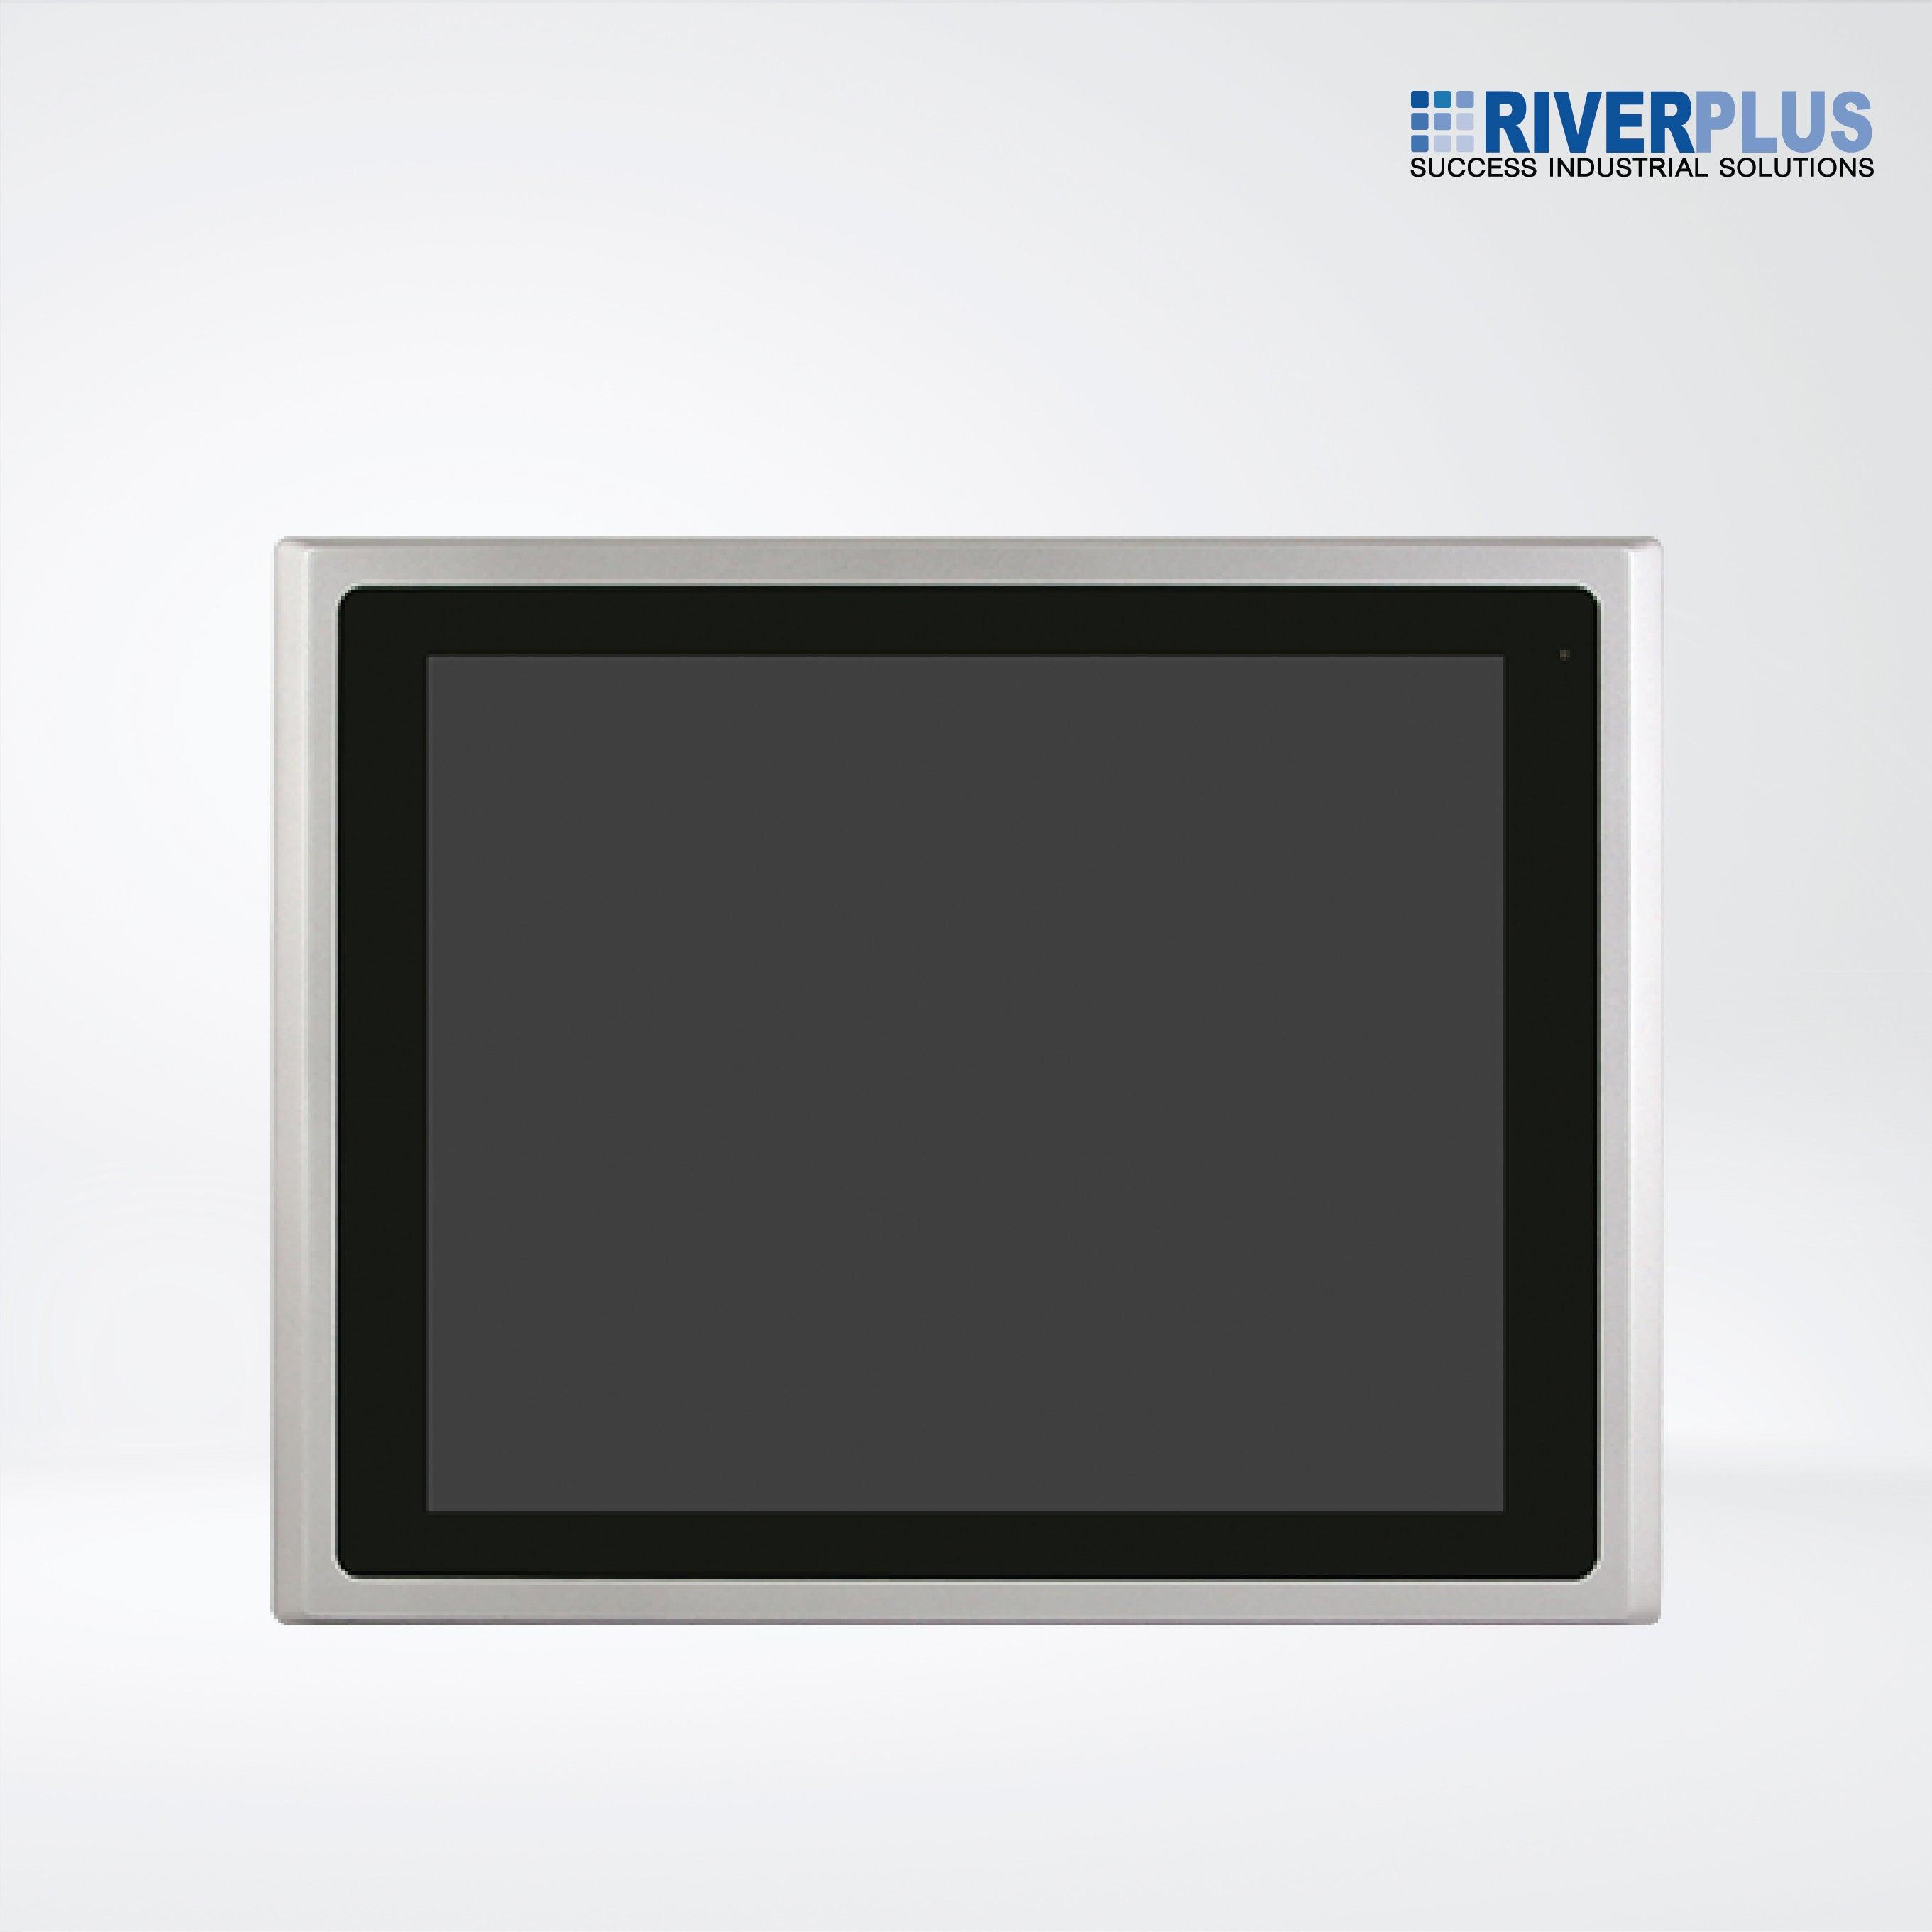 ARCHMI-917BPH 8th Gen. Intel Core i3/i5, Fanless Industrial Compact Size Panel PC - Riverplus